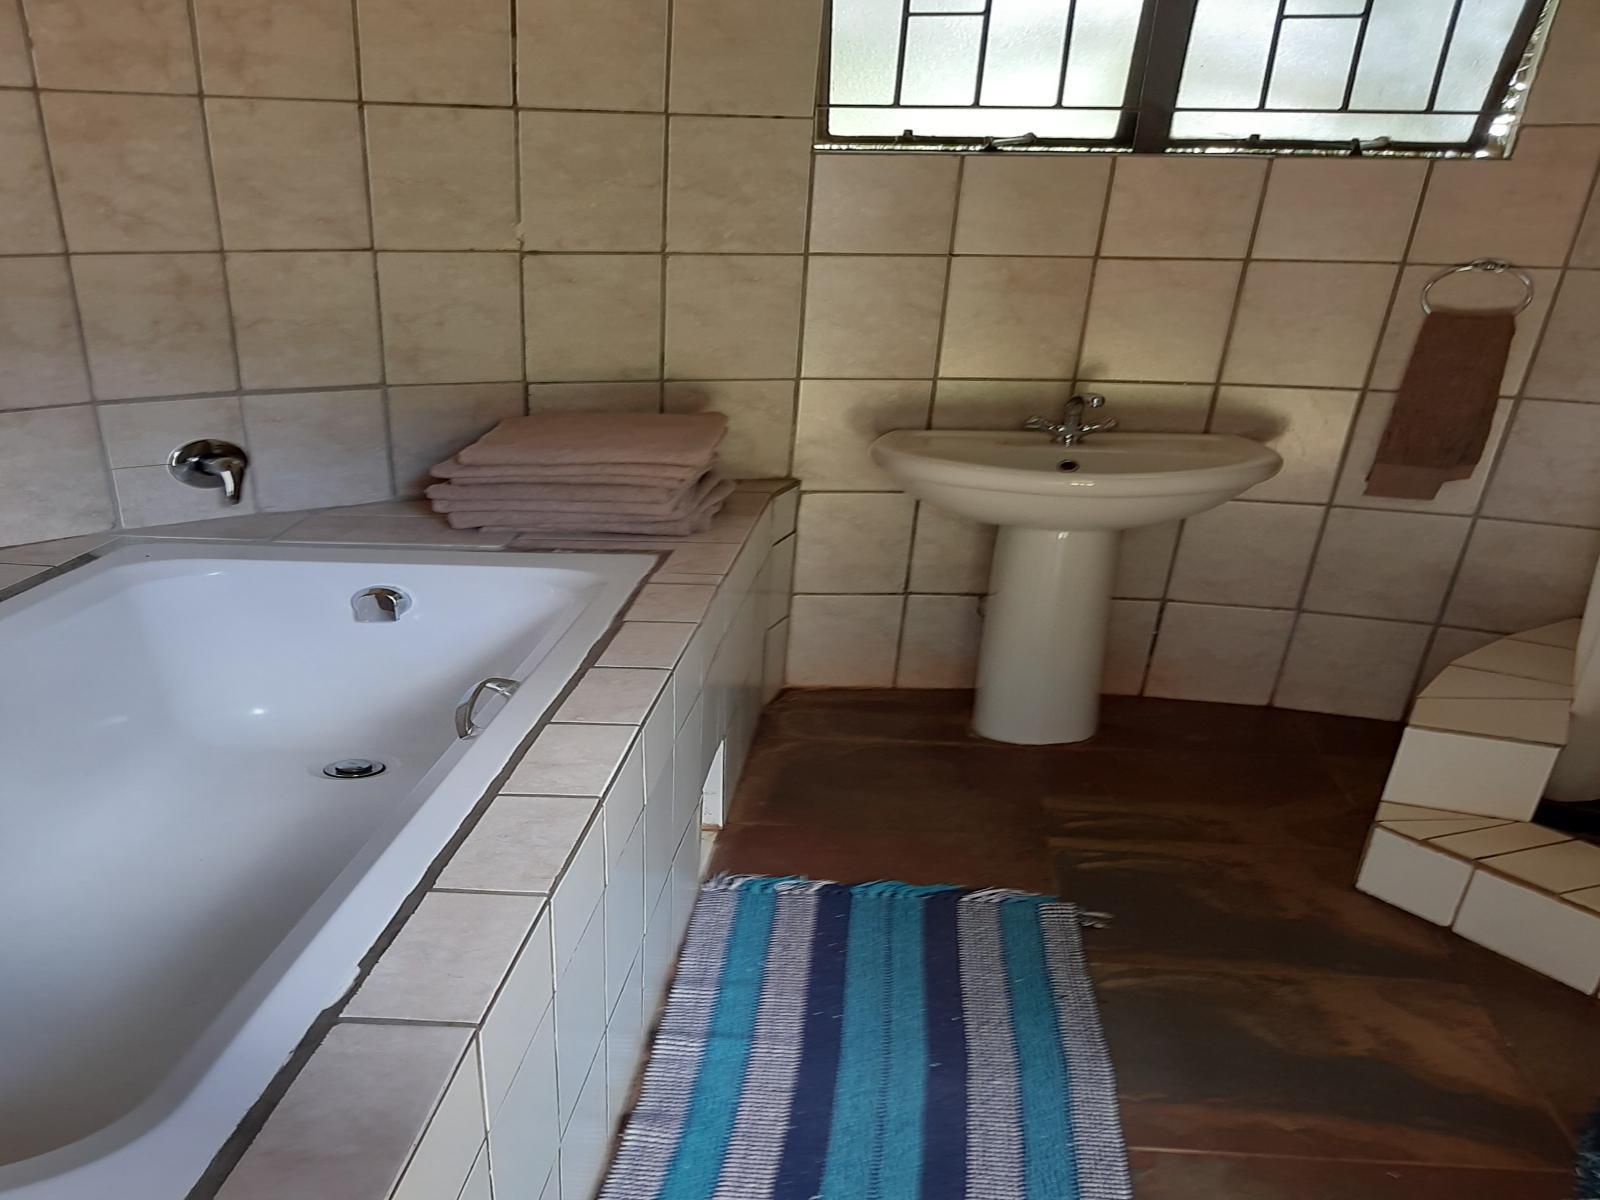 Gallery Inn Bela Bela Warmbaths Limpopo Province South Africa Bathroom